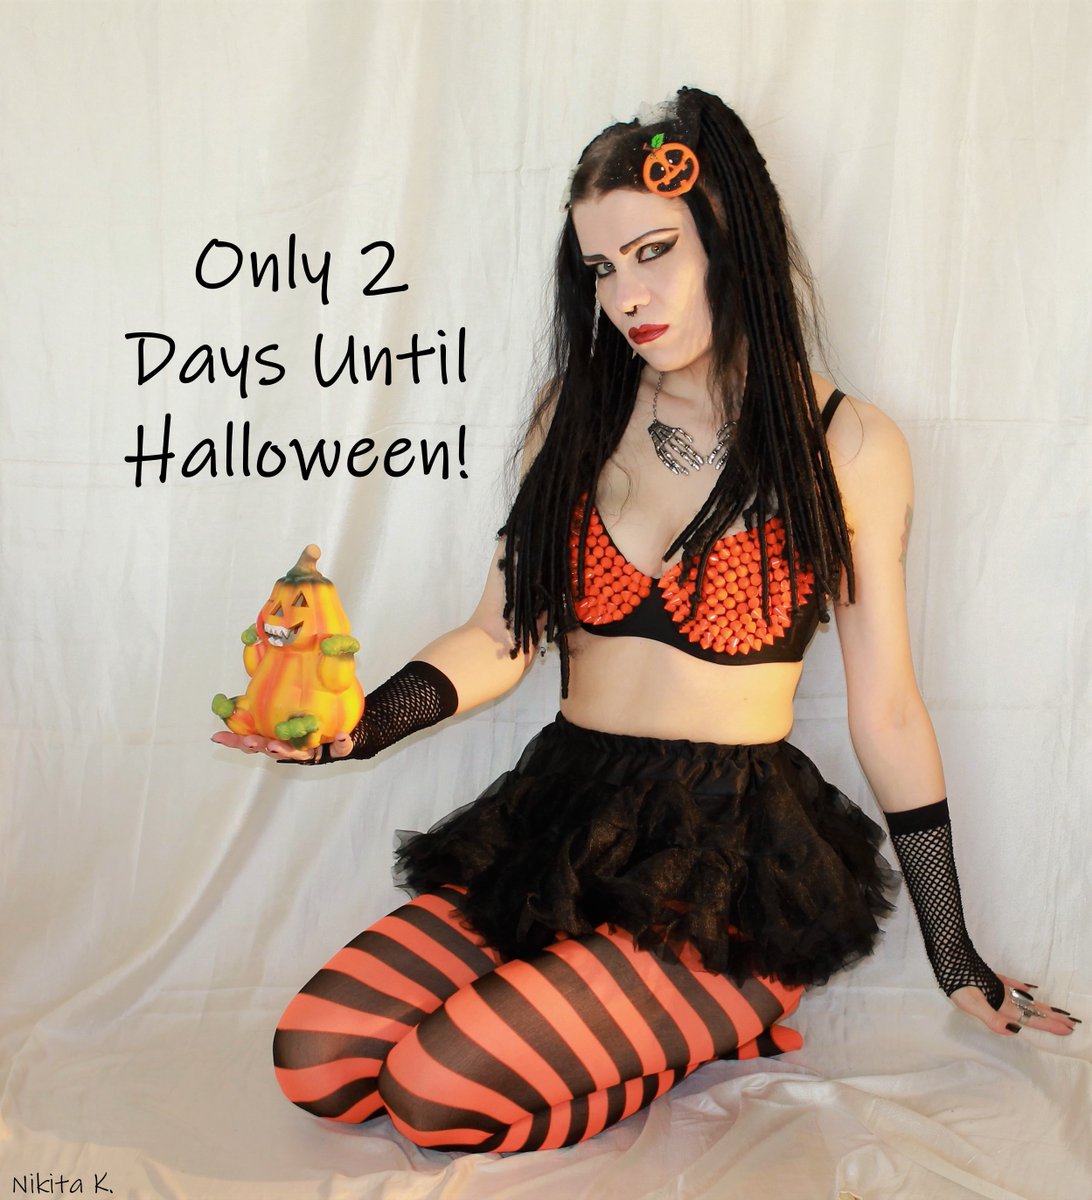 #HalloweenCountdown #Halloween2020 #cybergoth #gothgirl #waitingforhalloween #HalloweenProject #CodeOrange🧡